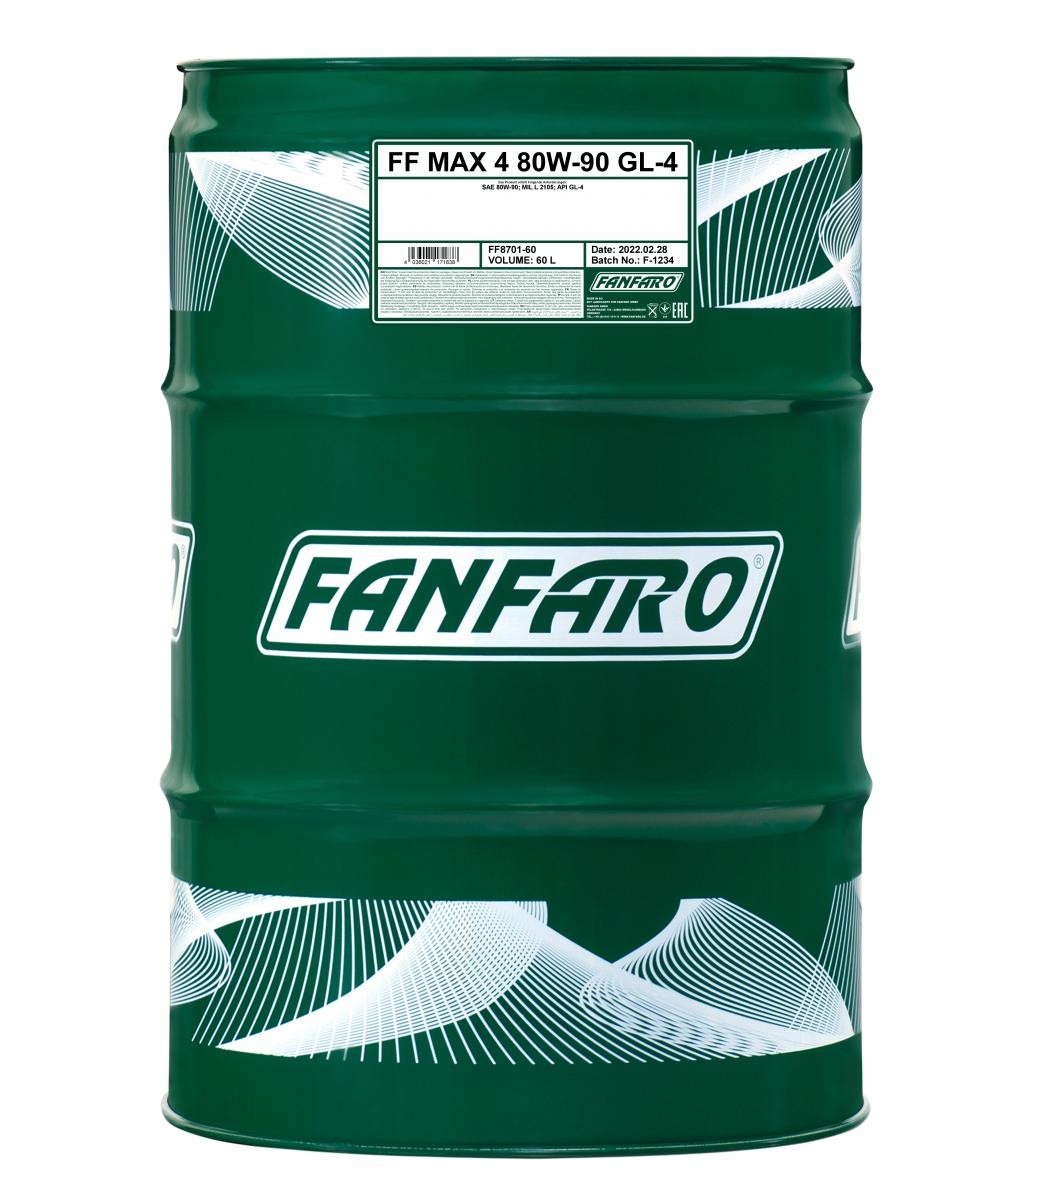 Original FF8701-60 FANFARO Gear oil VOLVO